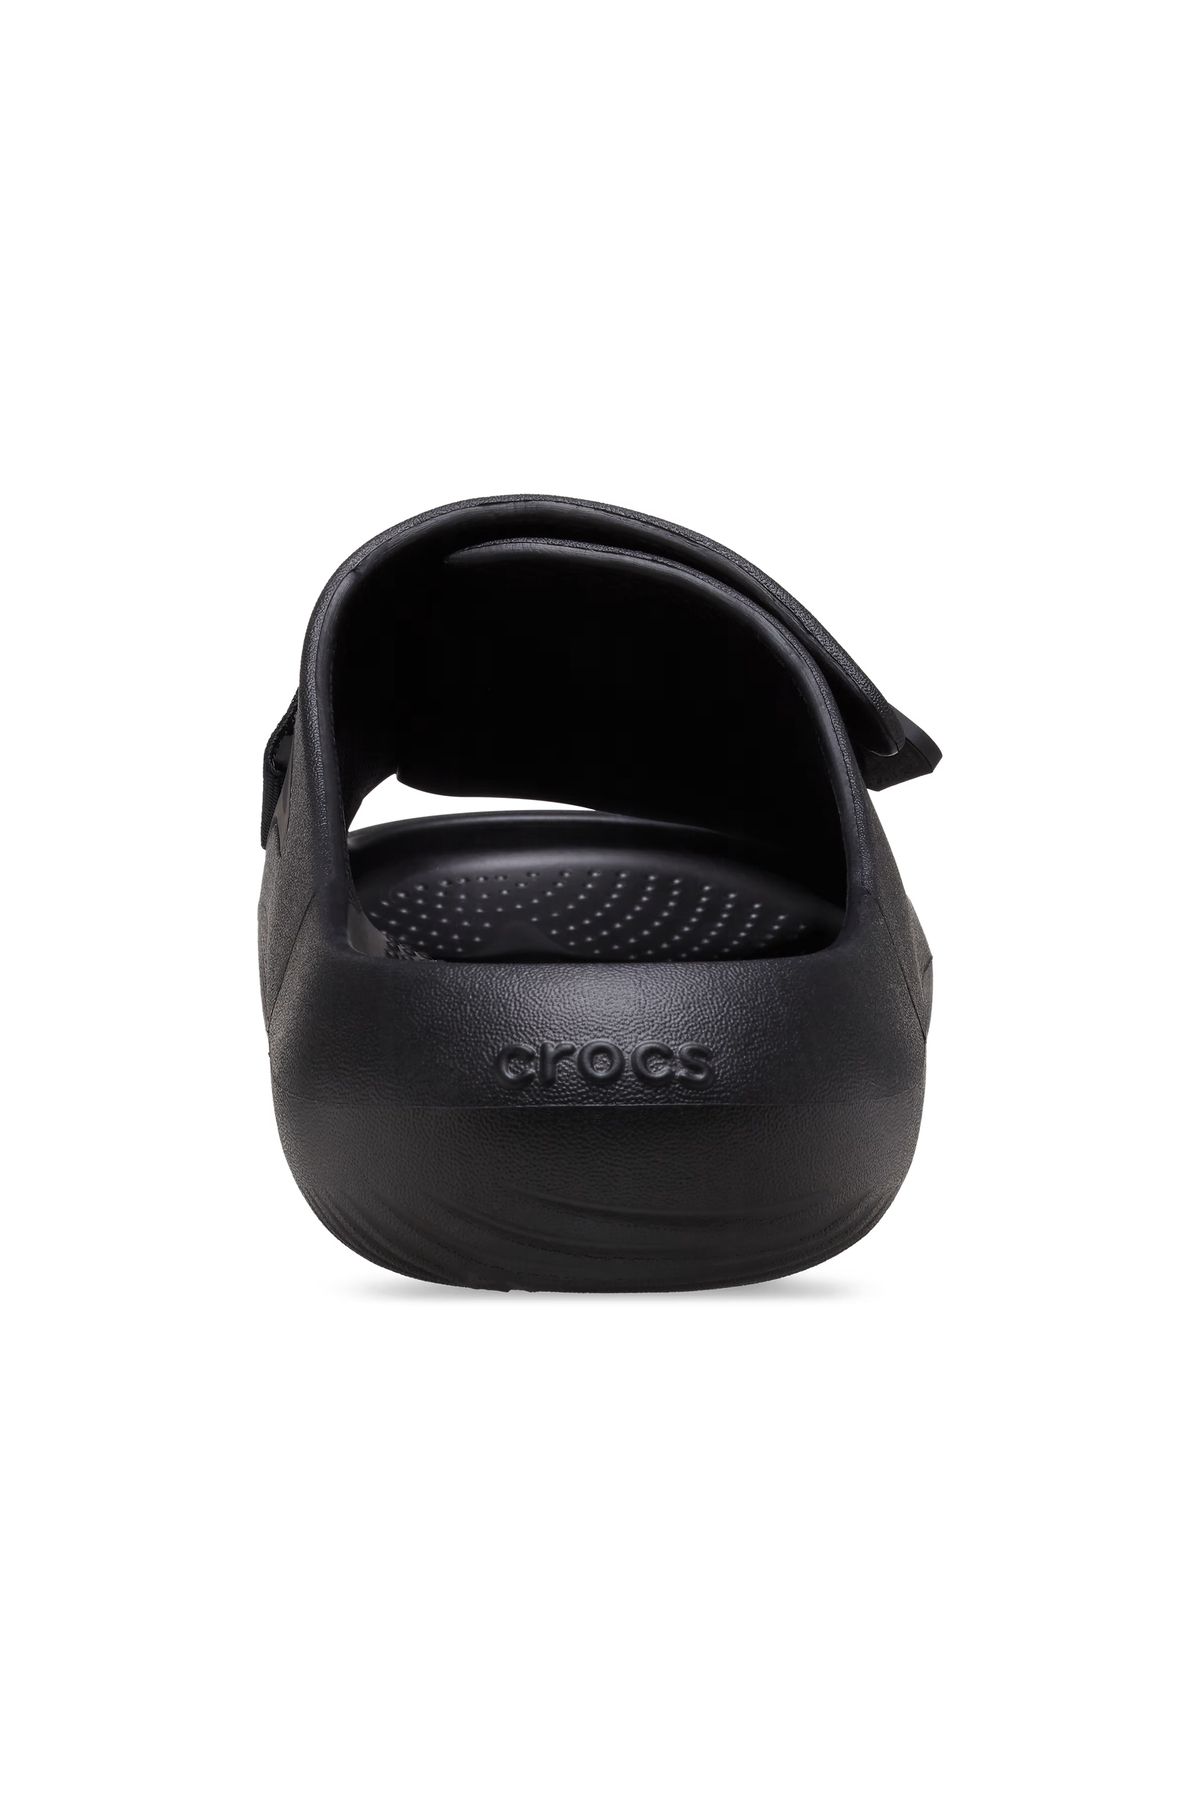 Crocs 209413-001 Crocs Mellow Luxe Recovery Slide Slipper Black